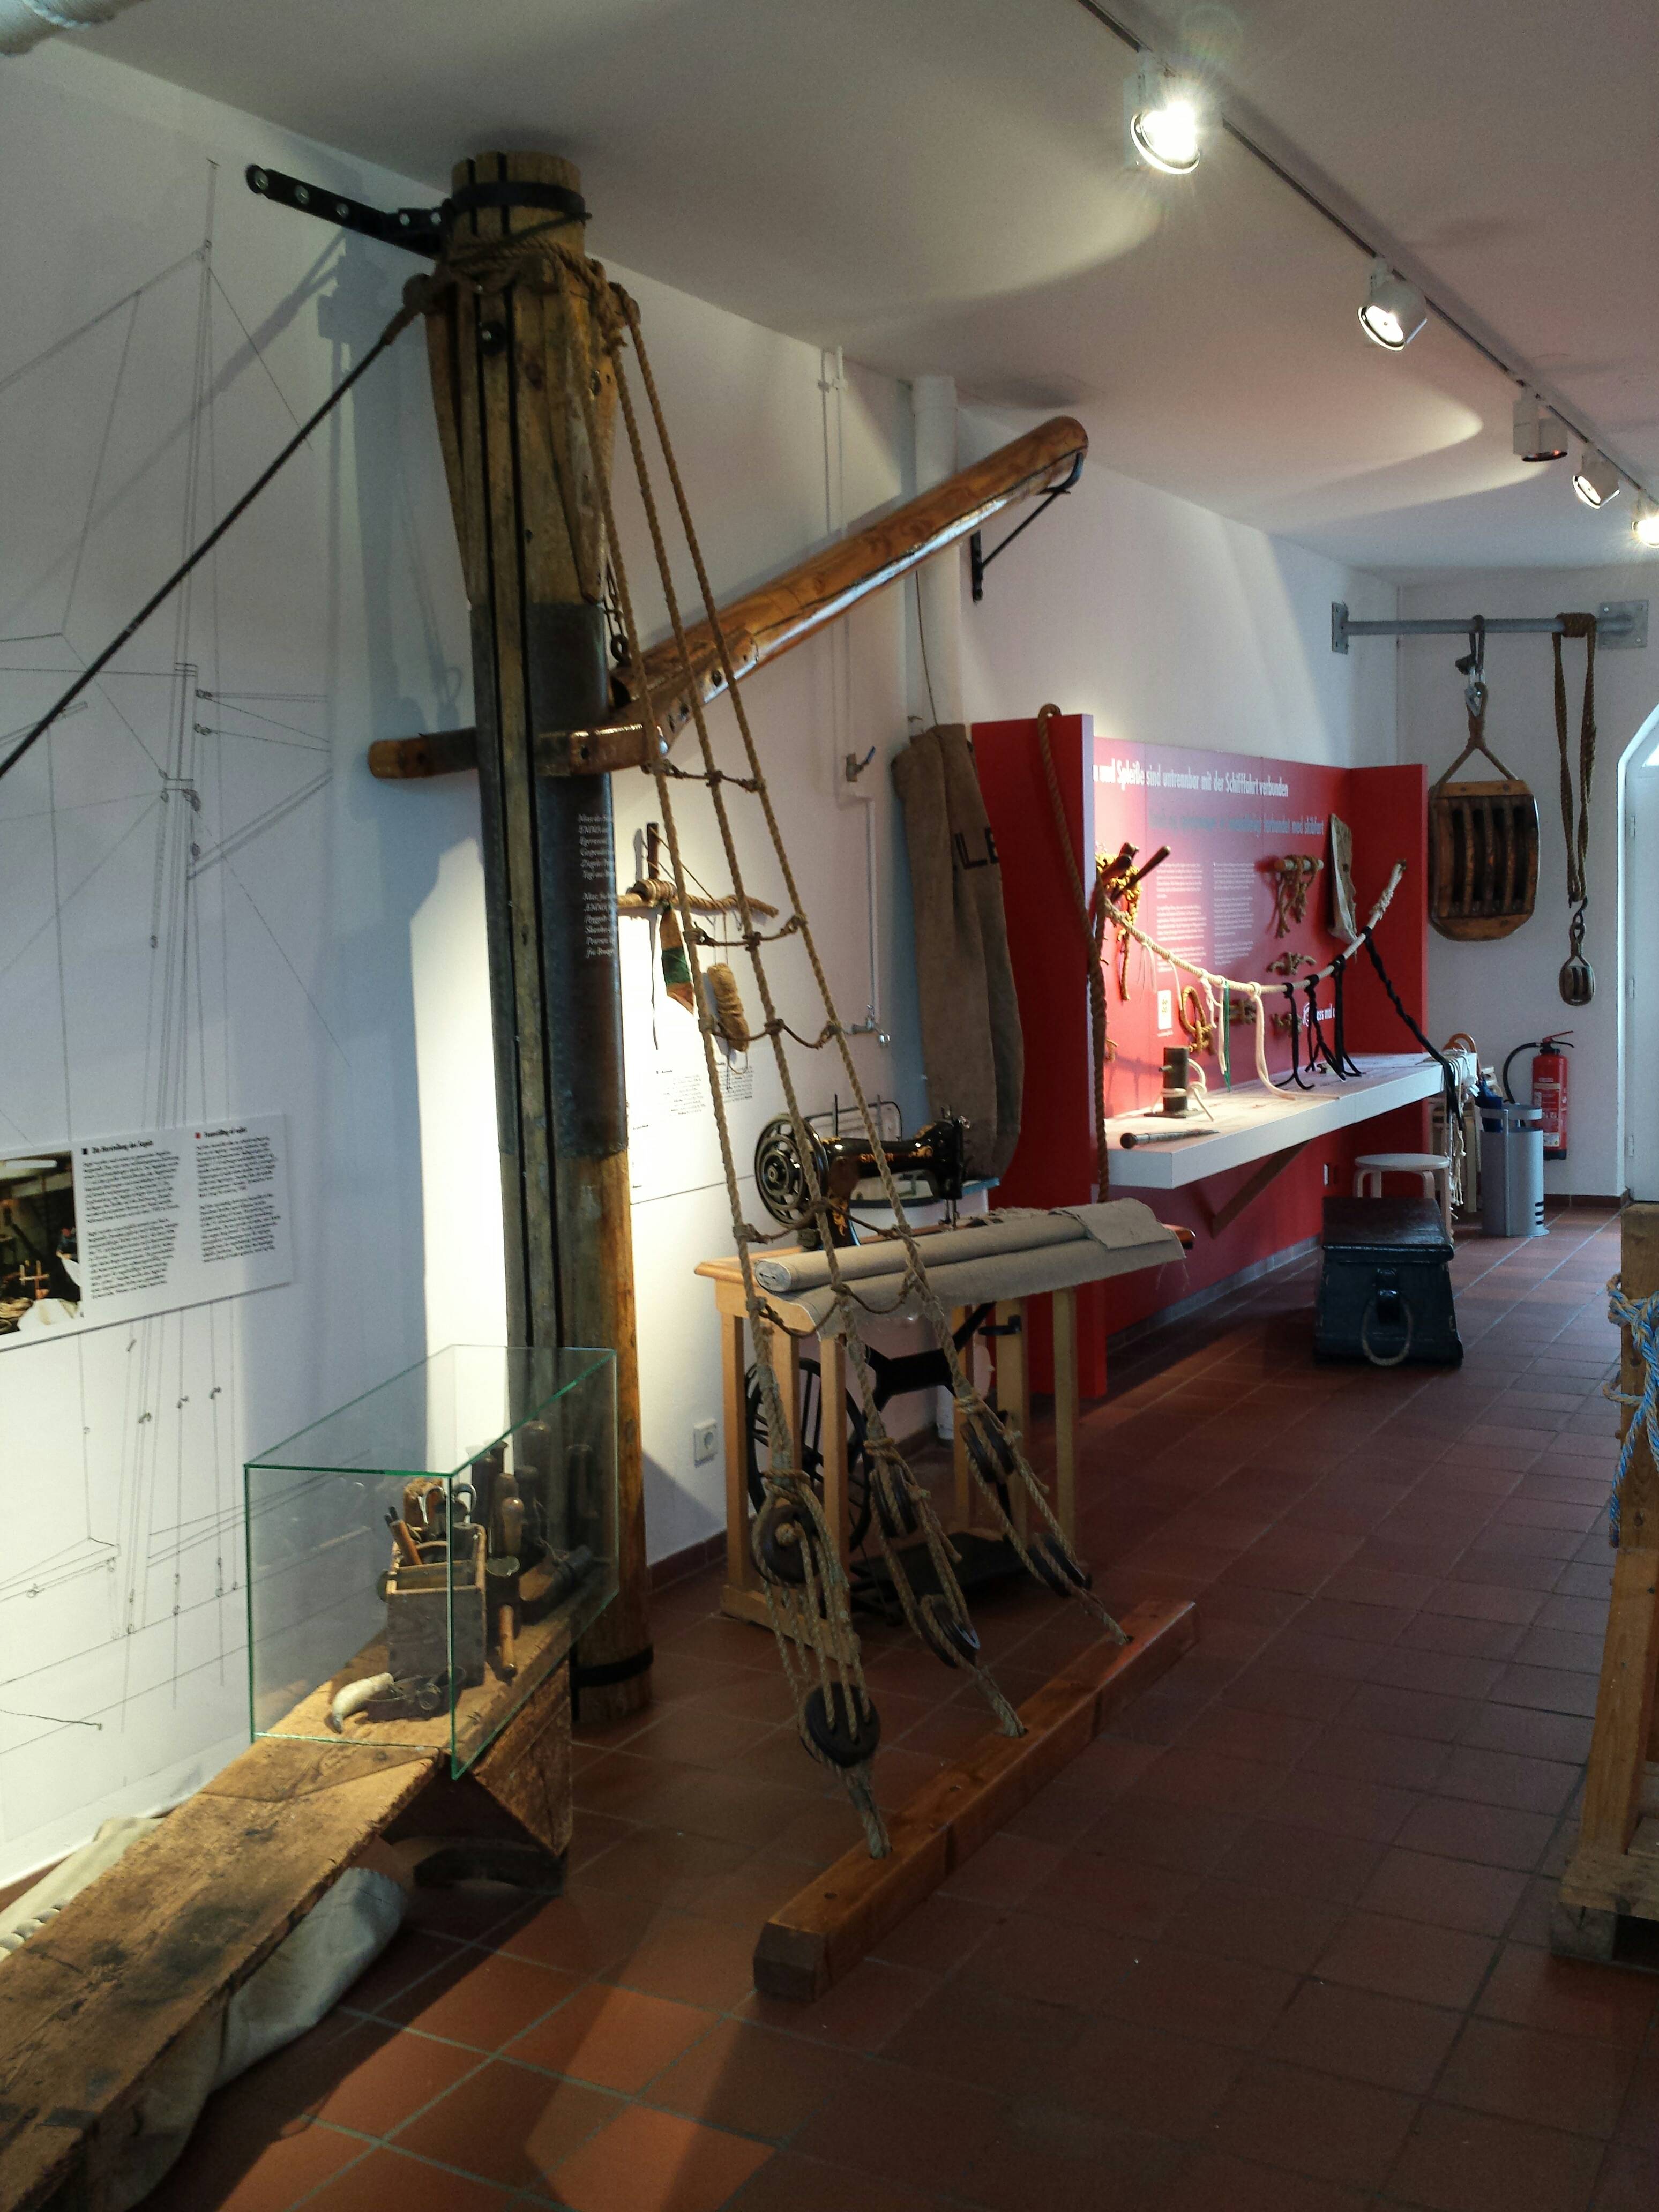 Bild 10 Rum-Museum im Schifffahrtsmuseum in Flensburg